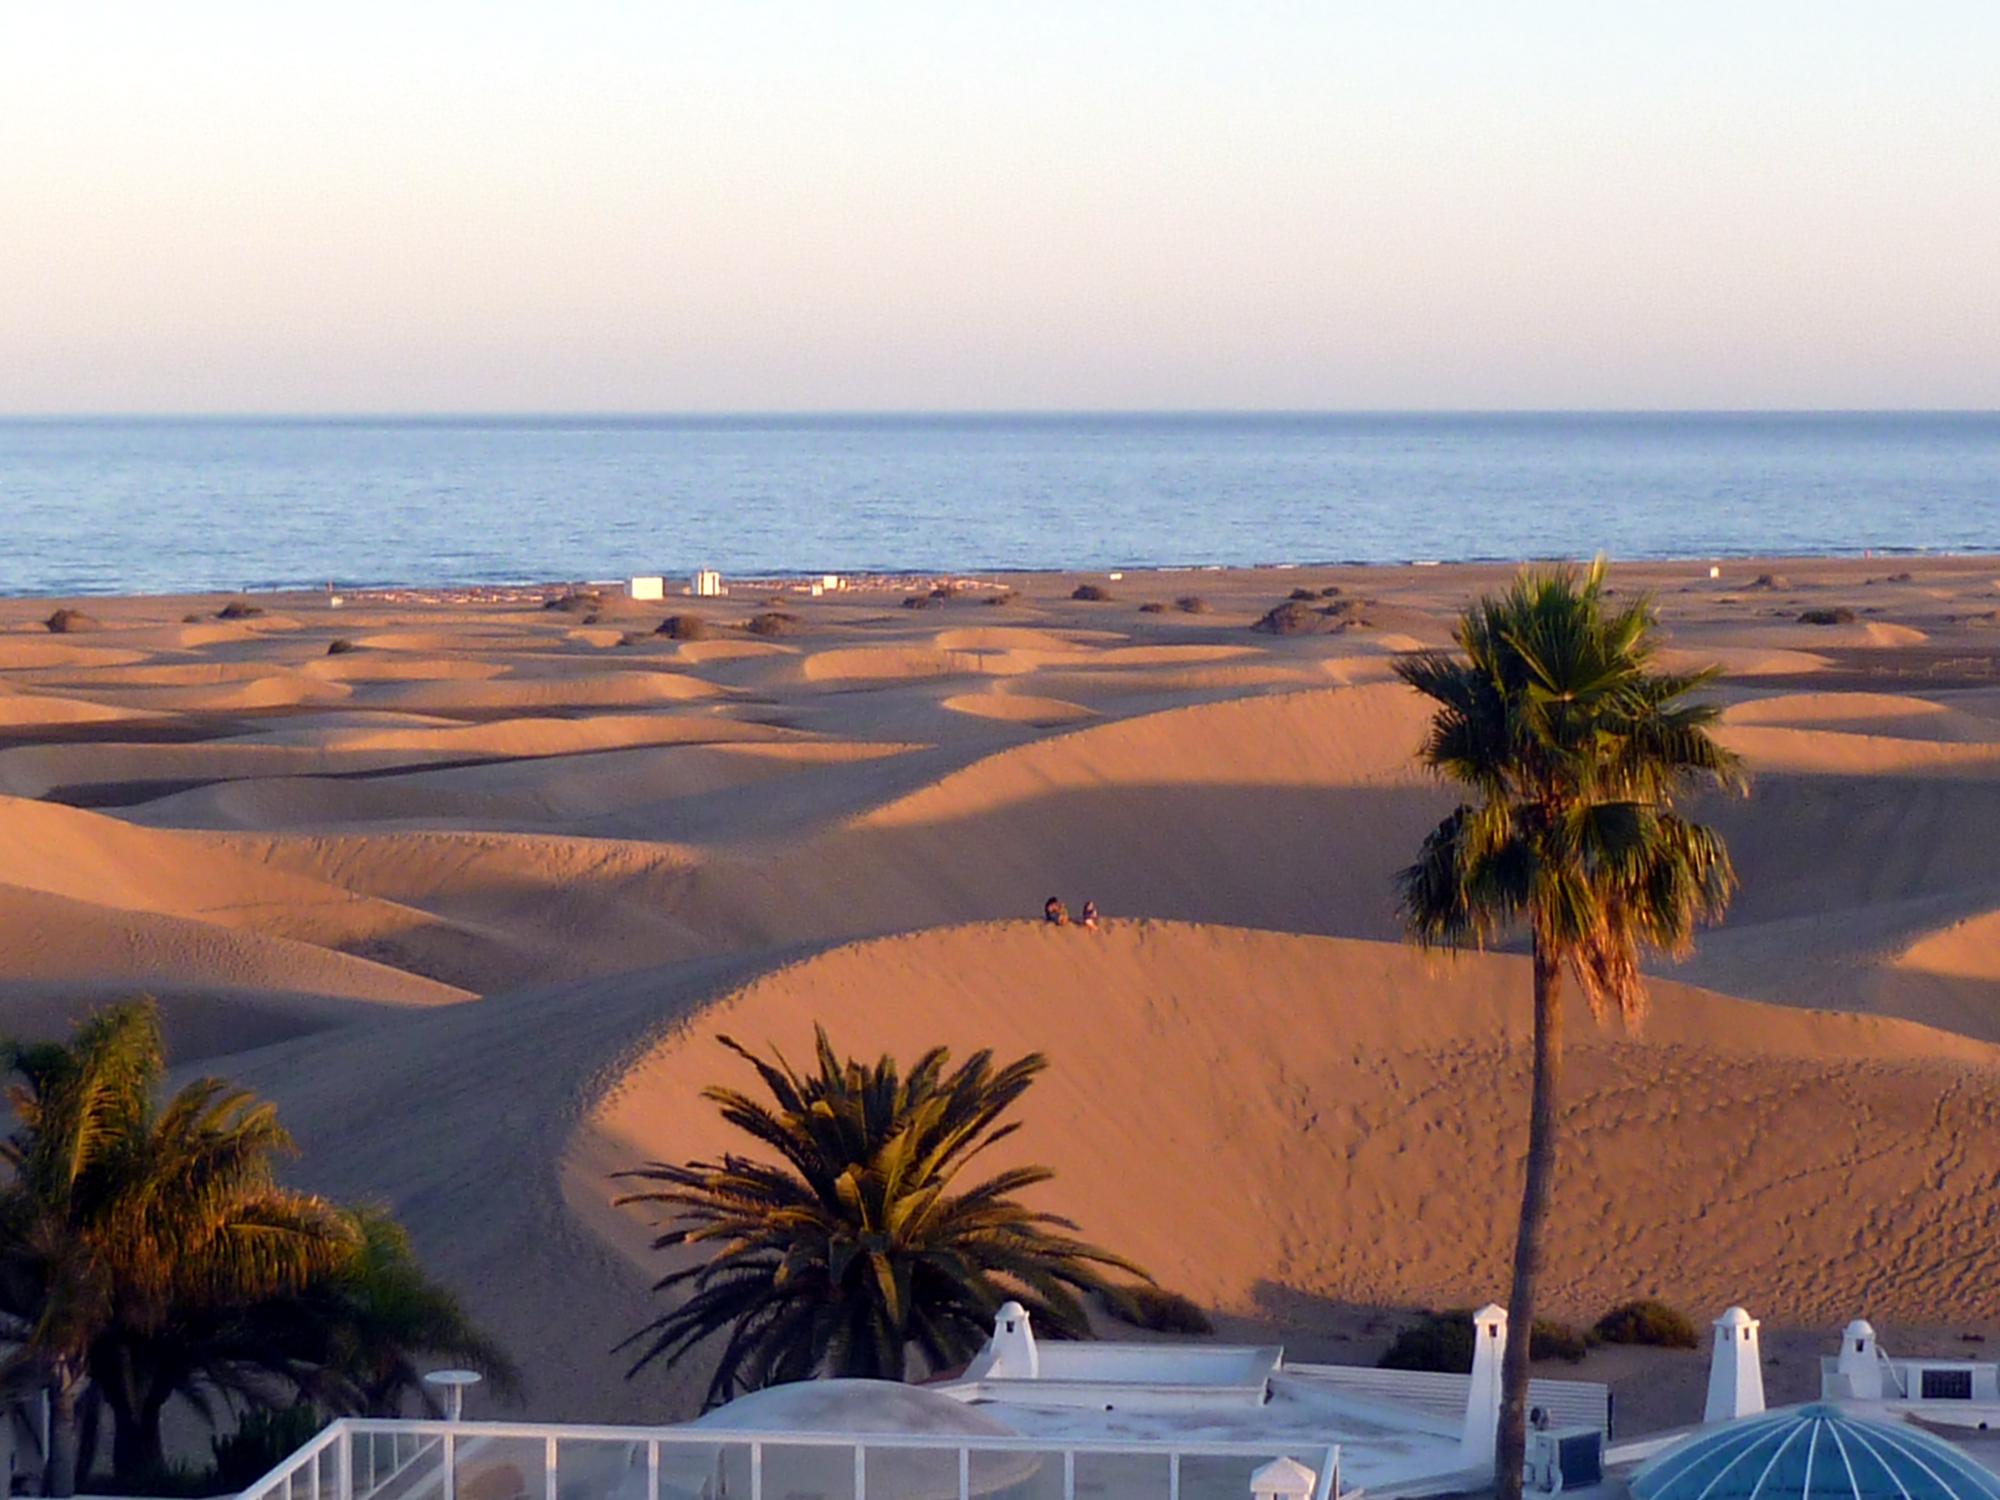  Canary Islands - Dunes #2